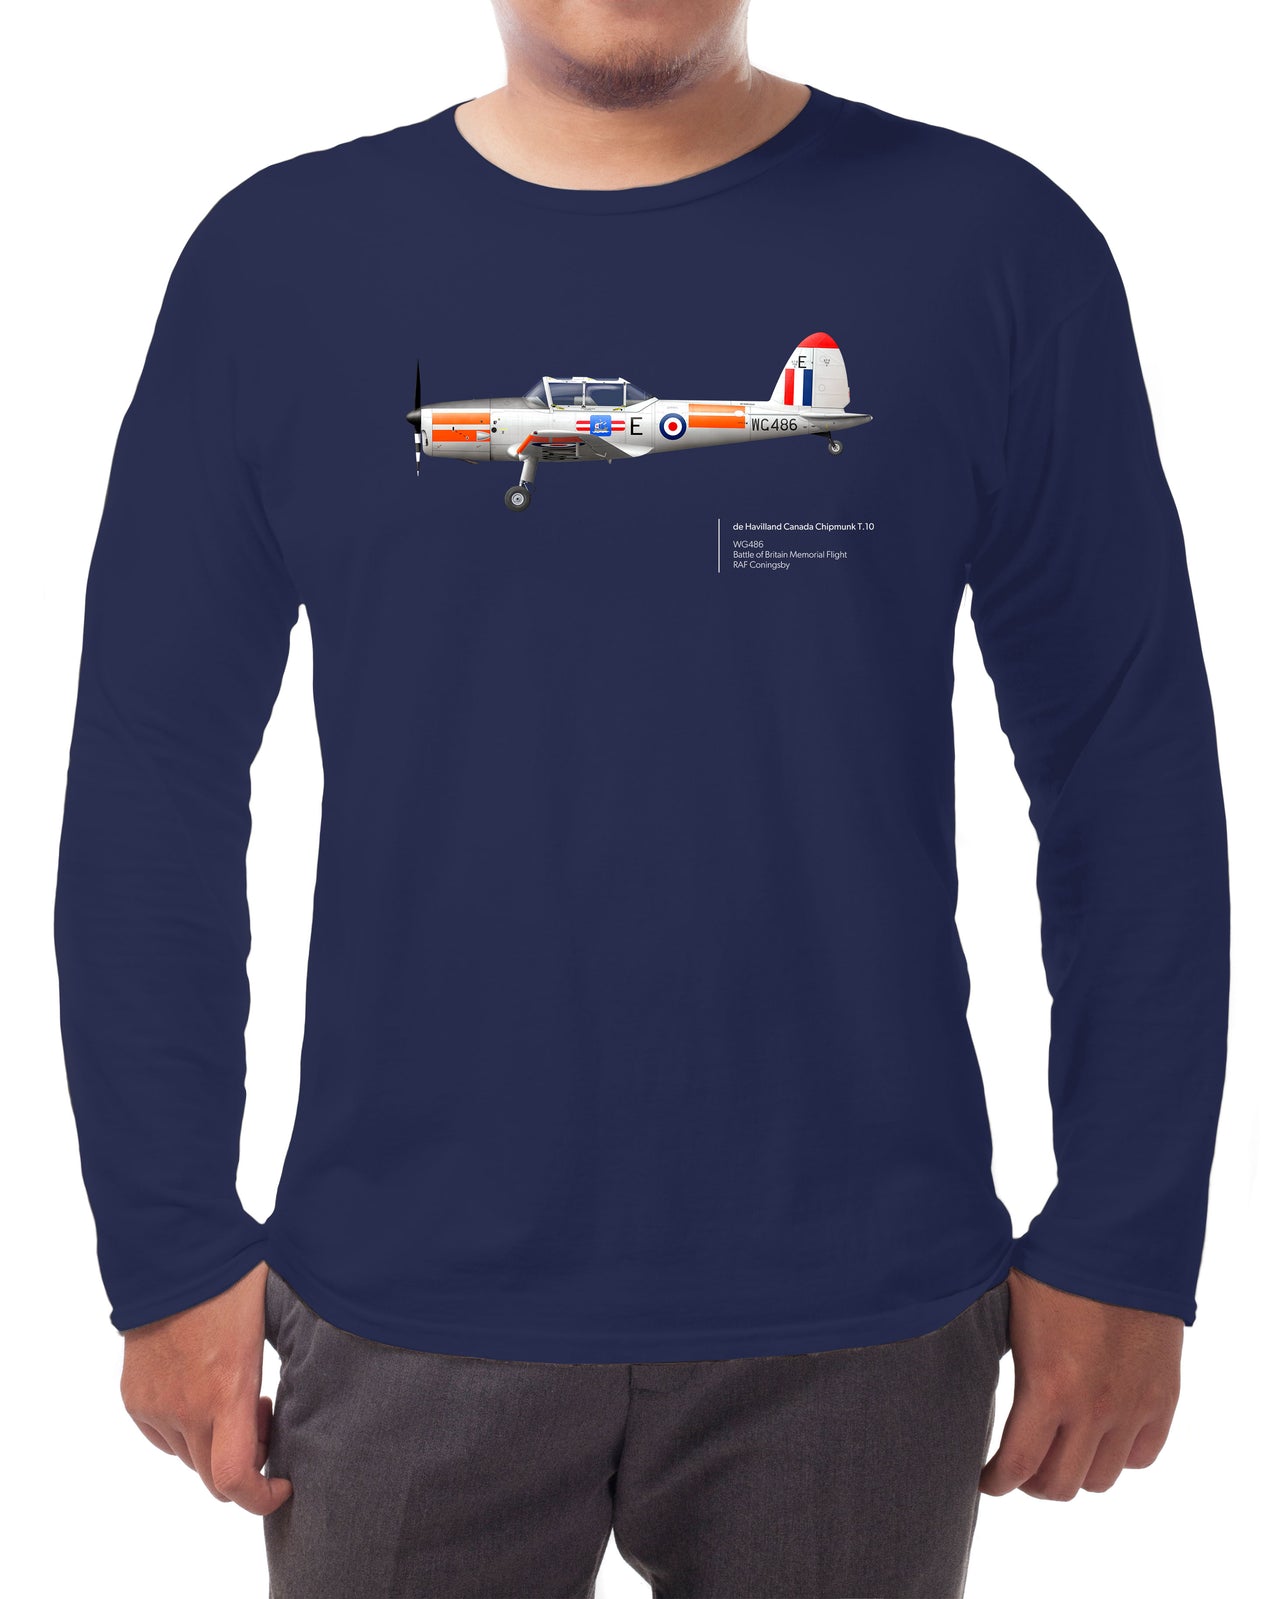 BBMF de Havilland Canada Chipmunk - Long-sleeve T-shirt